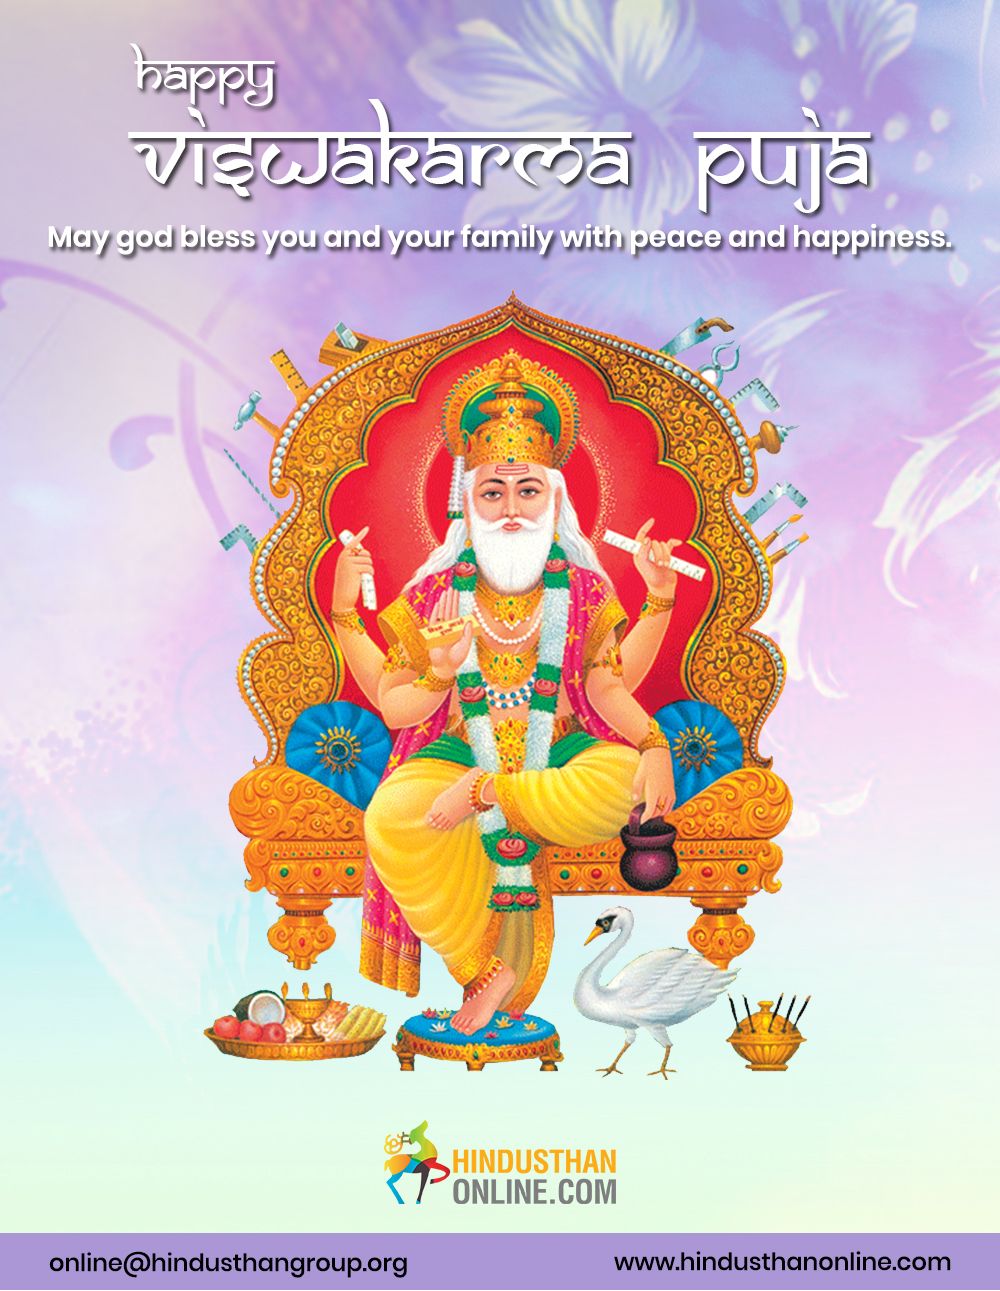 Vishwakarma Puja Date 2019 , HD Wallpaper & Backgrounds